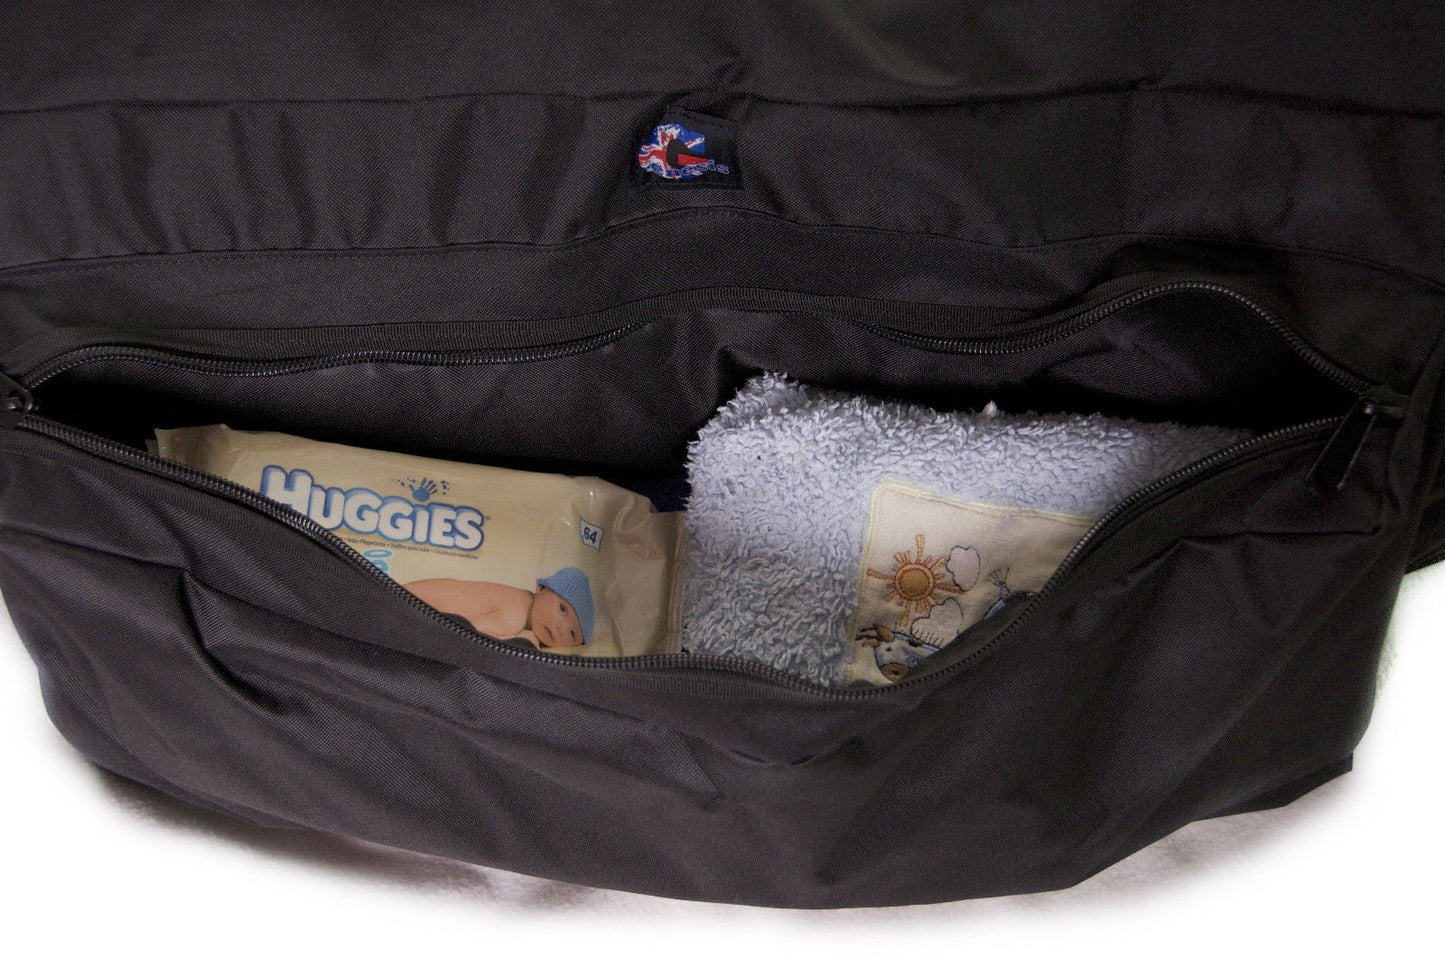 Genesis Travel Bag Baby Jogger compatible